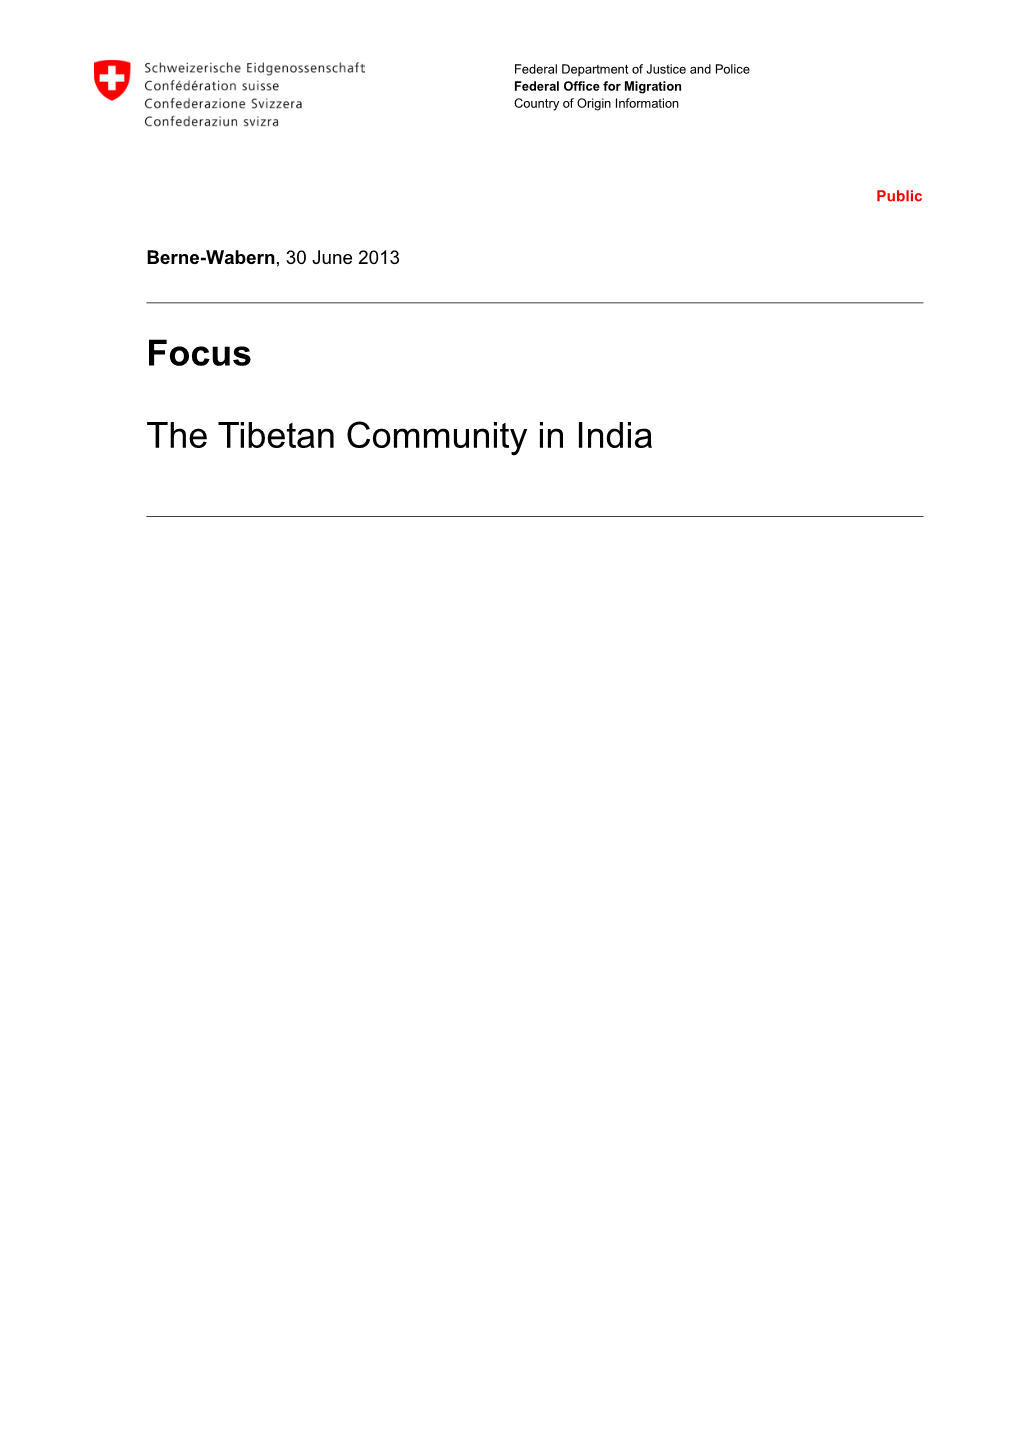 The Tibetan Community in India